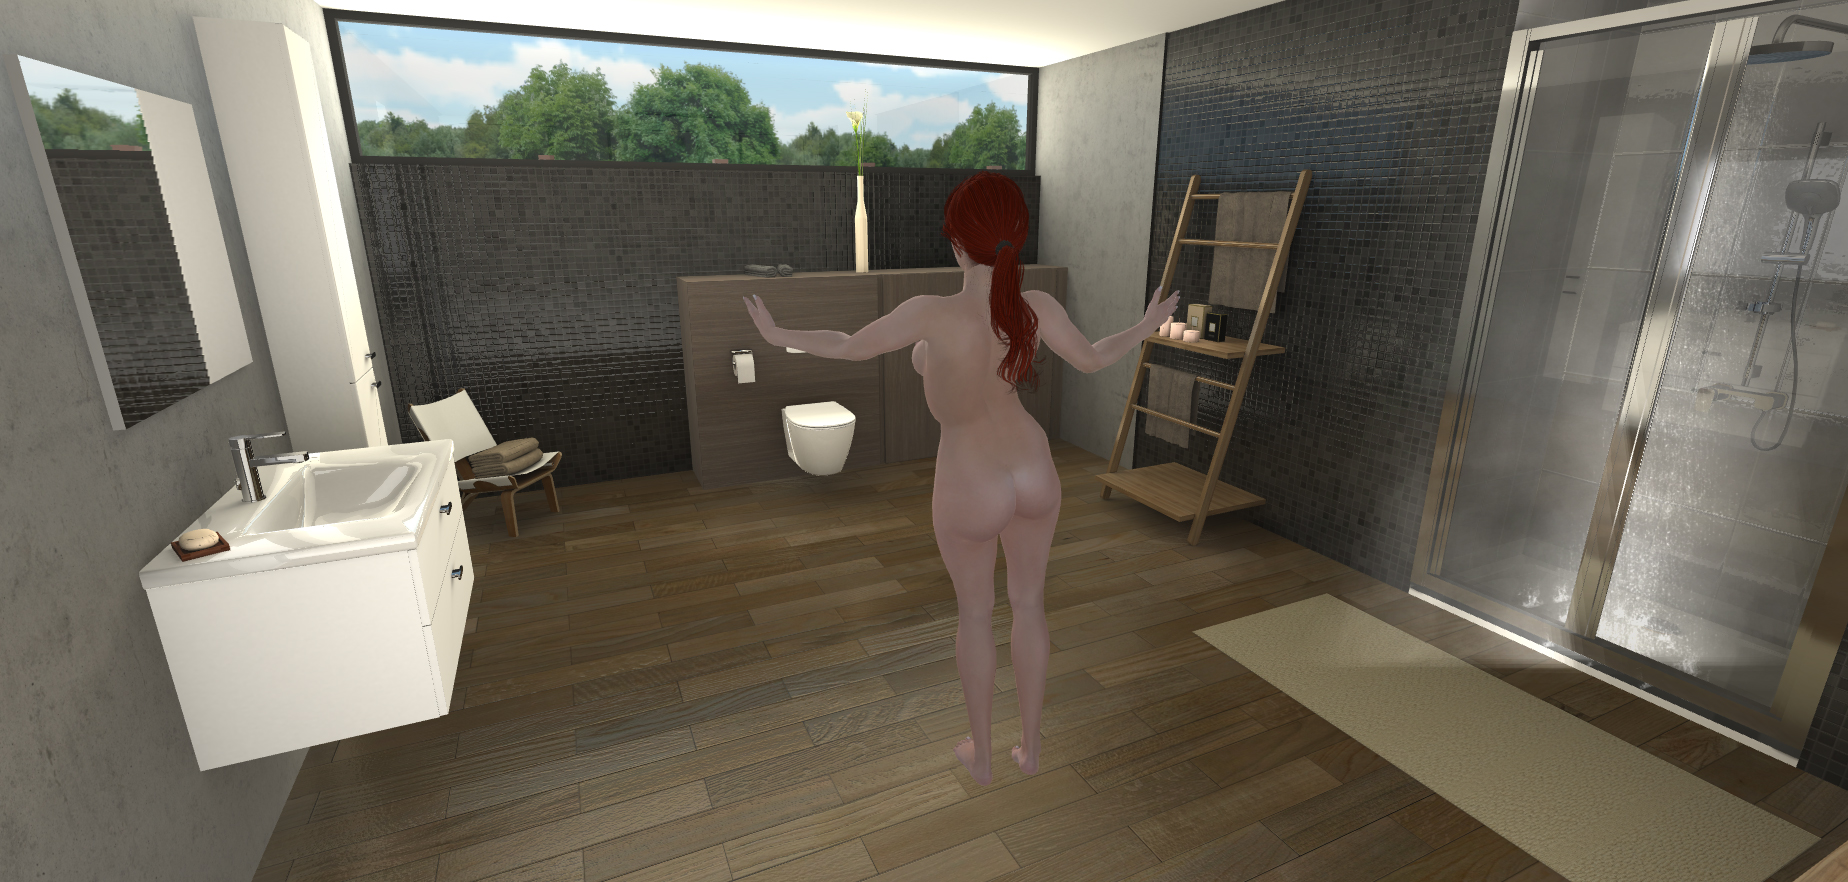 la douche voyeur experience znelarts porn game virtual reality 4